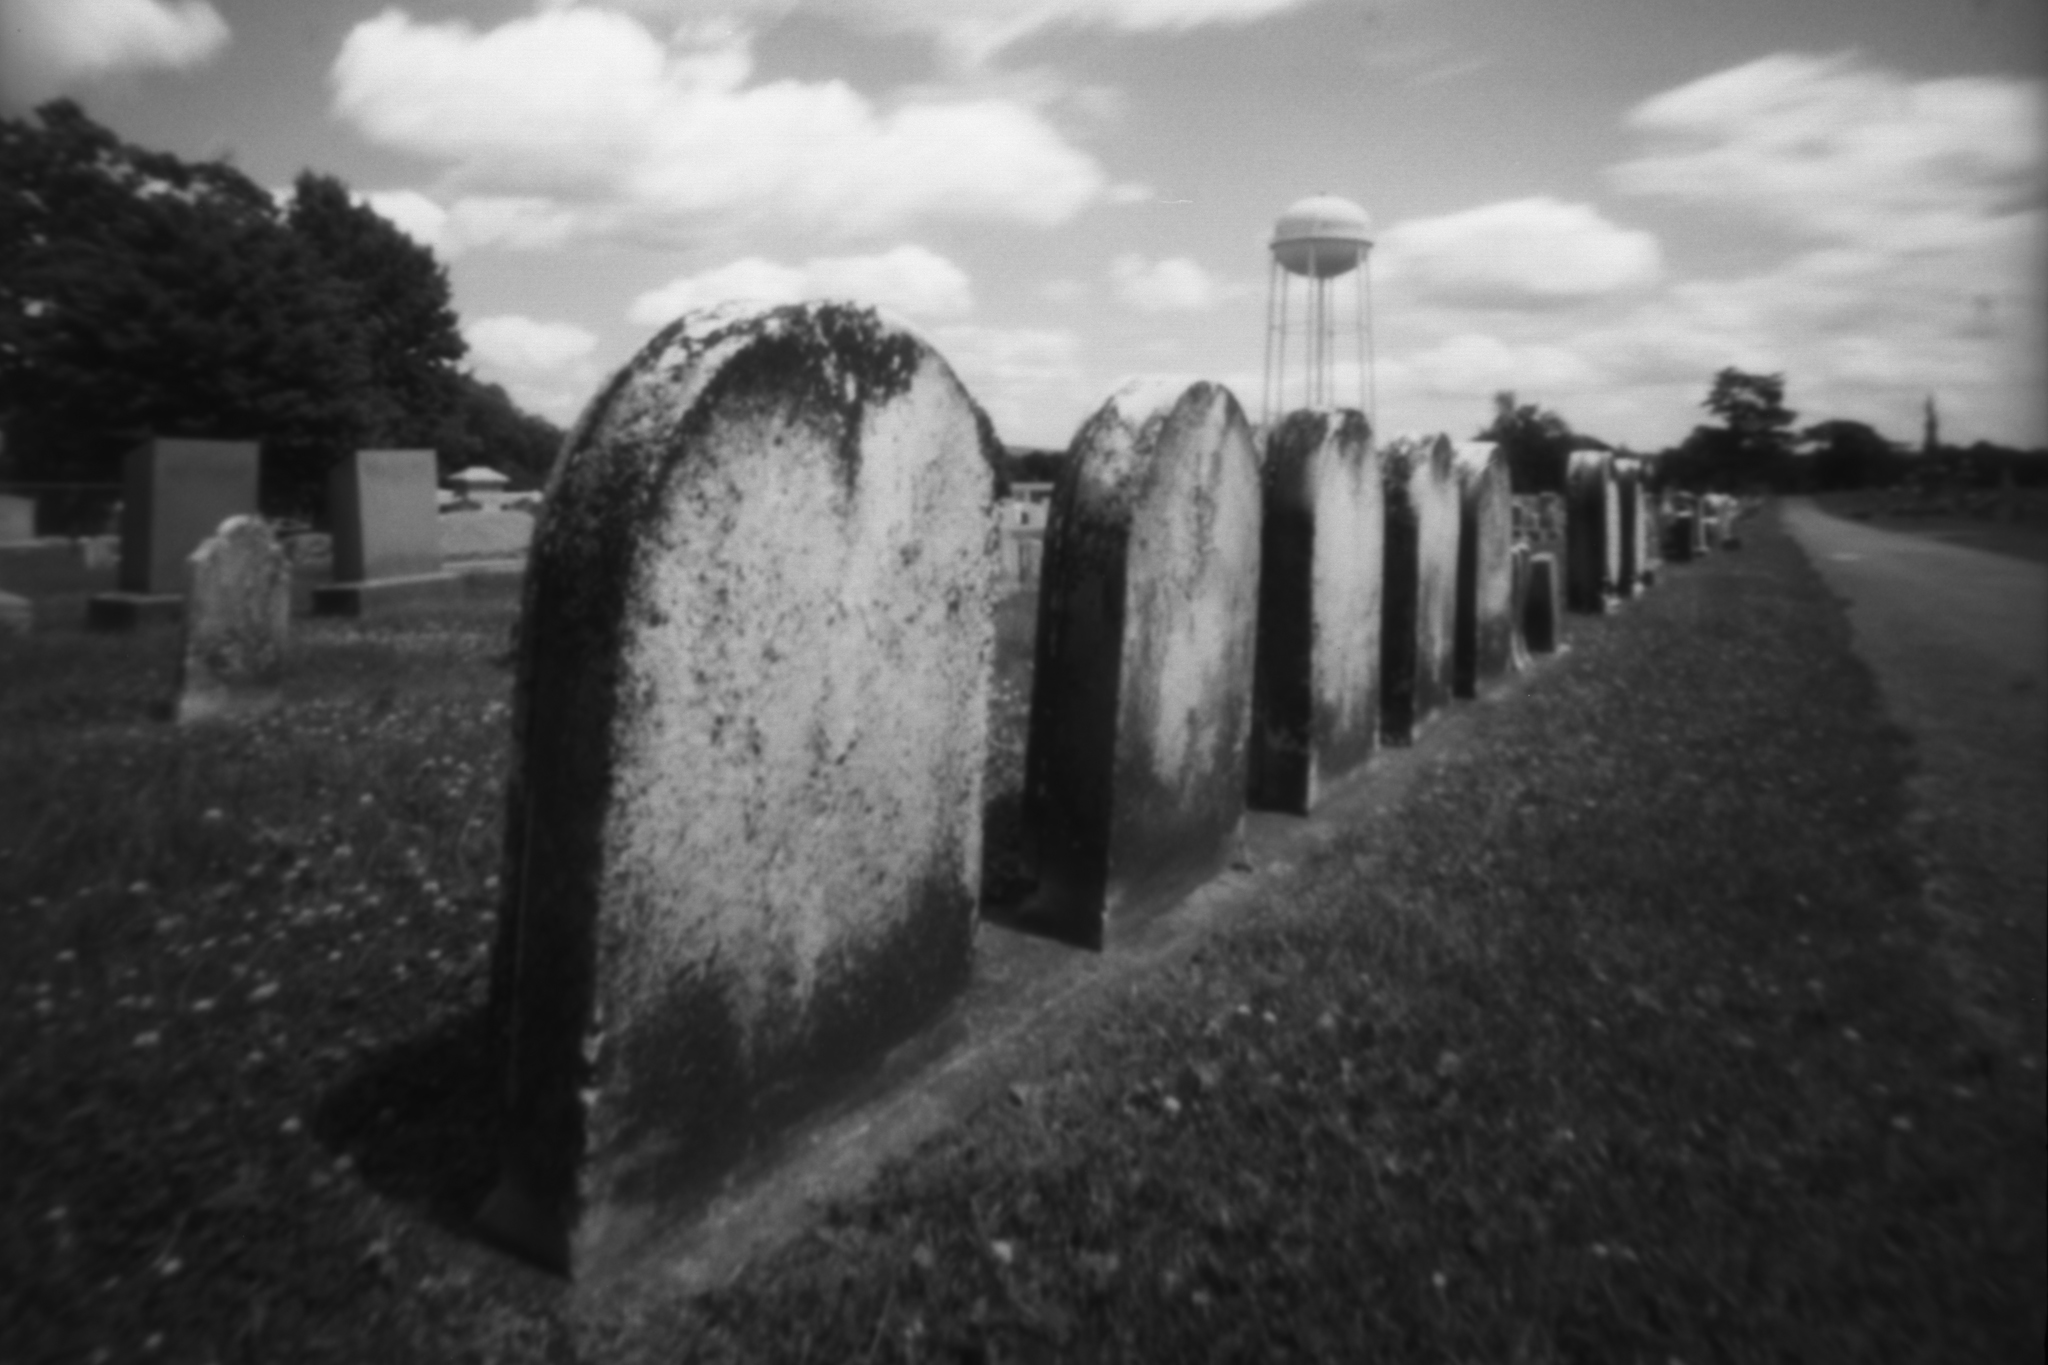  Fairview Cemetery.&nbsp; Kutztown, Pennsylvania.&nbsp; Zero Image 6x9. 